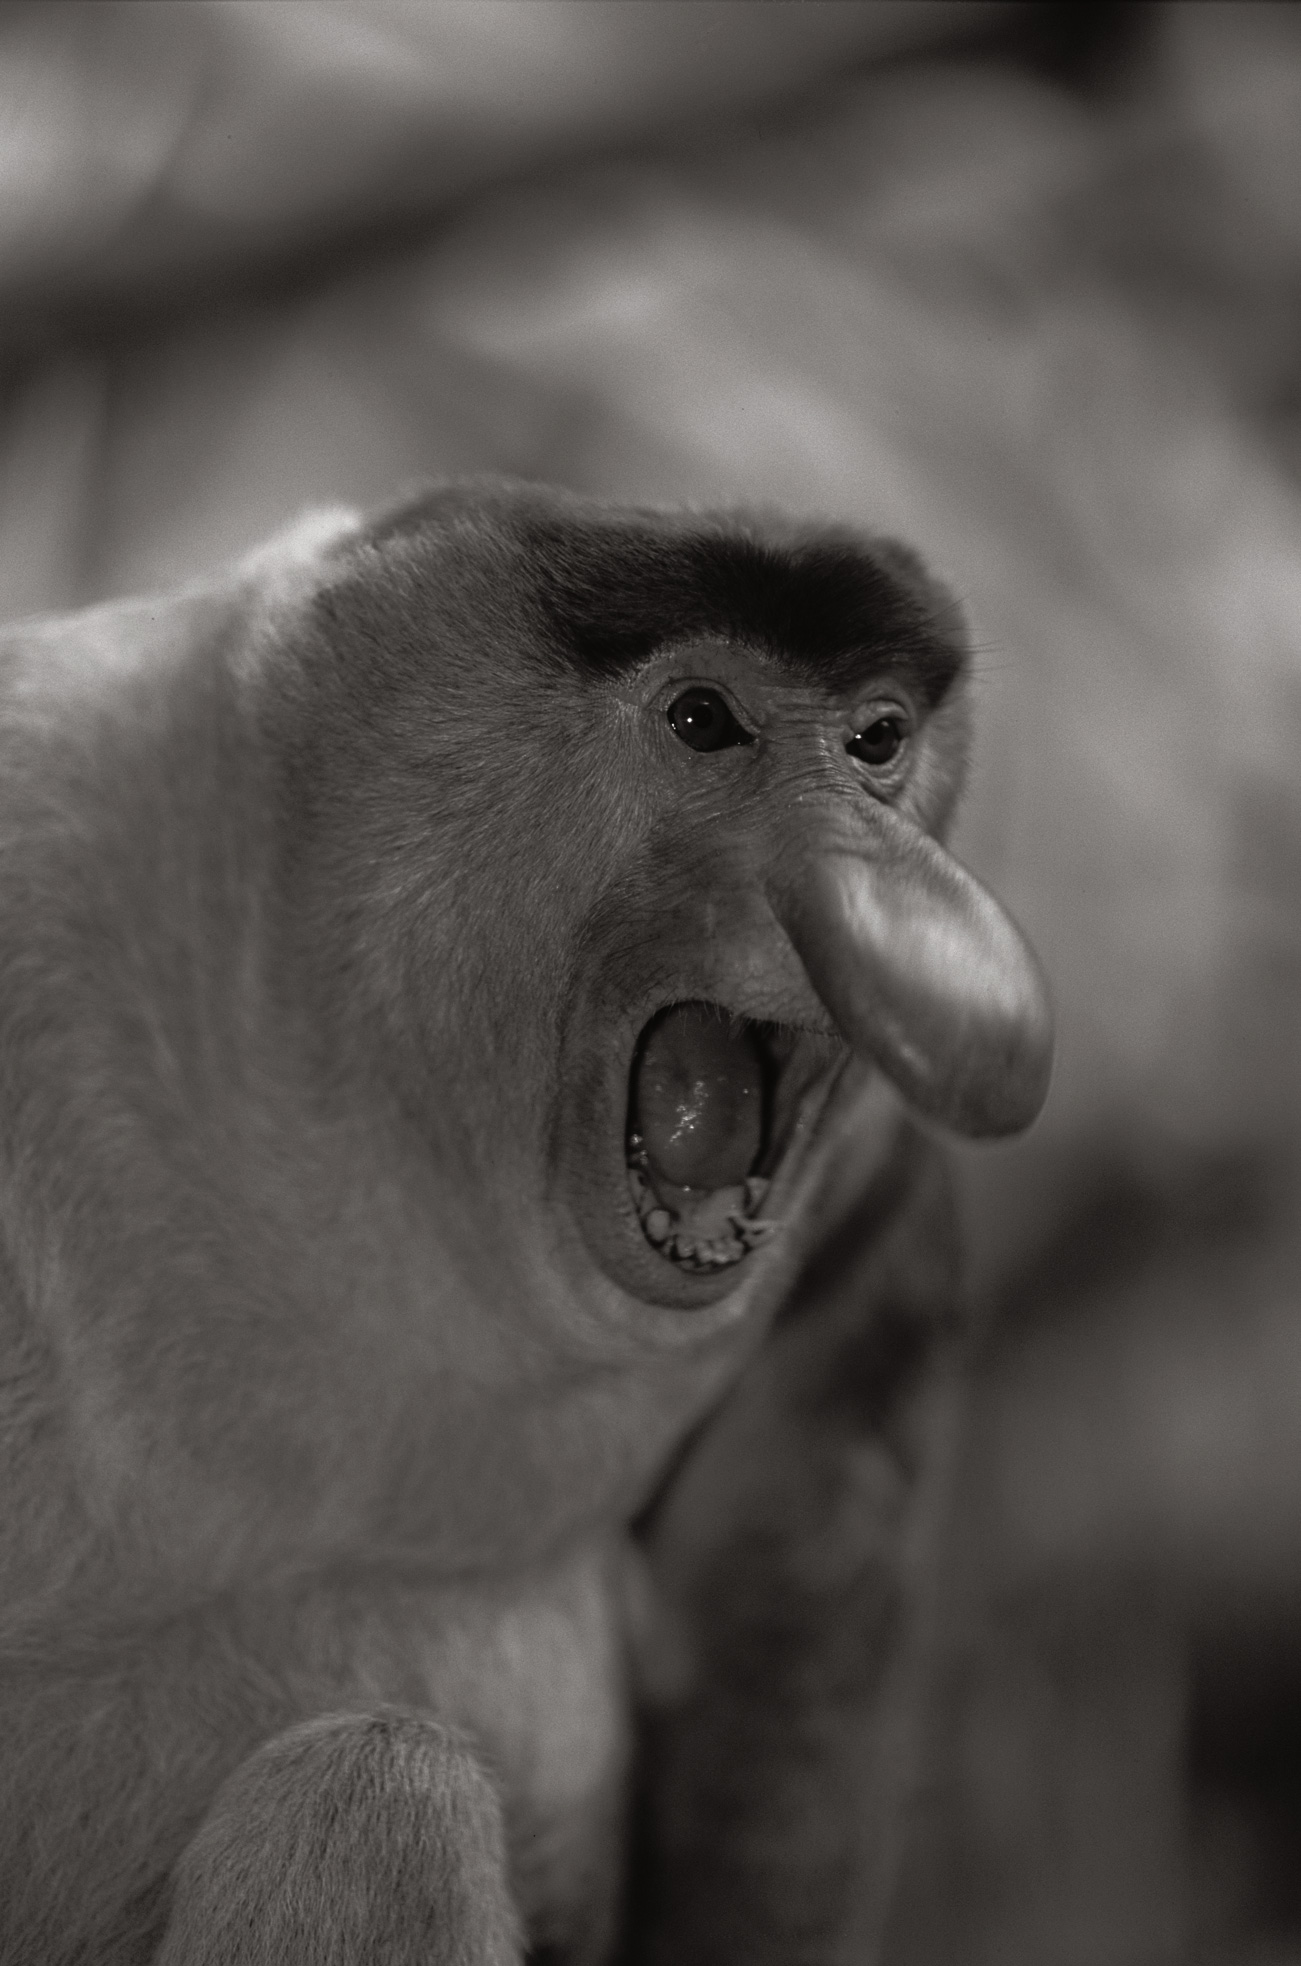 A photograph of a proboscis monkey.